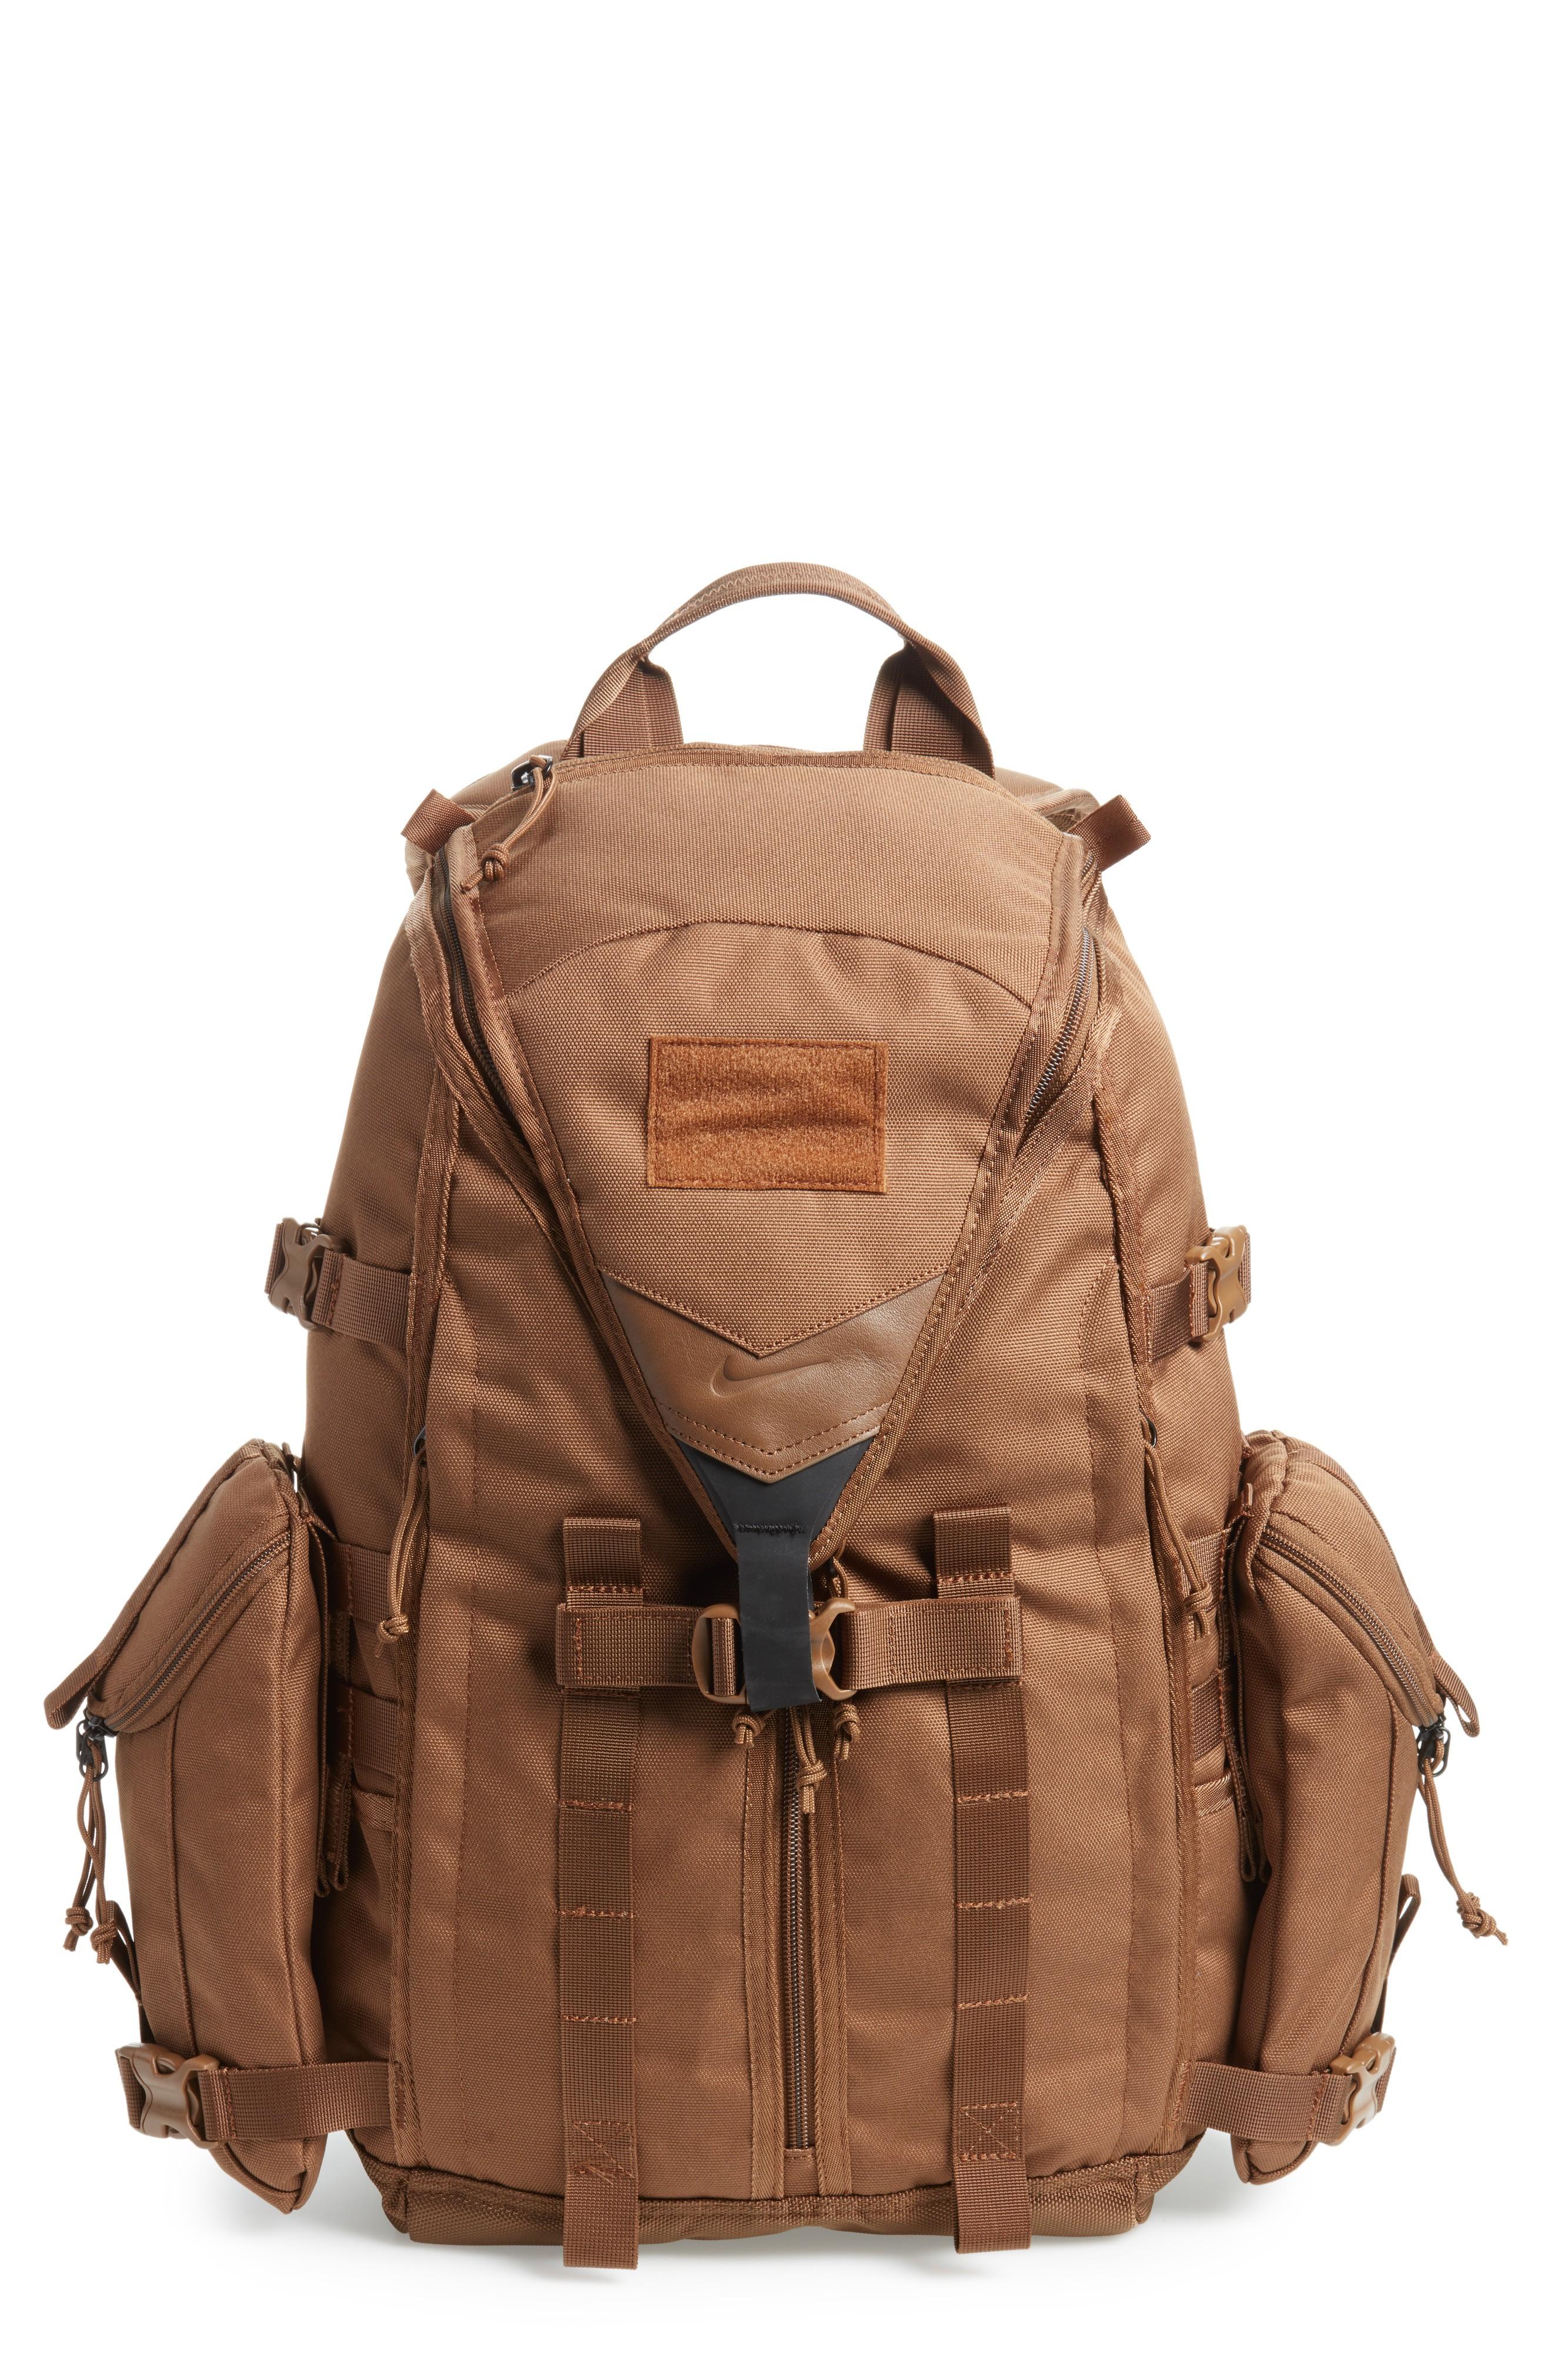 Nike Sfs Responder Backpack - Brown In Military Brown/ Military Brown |  ModeSens